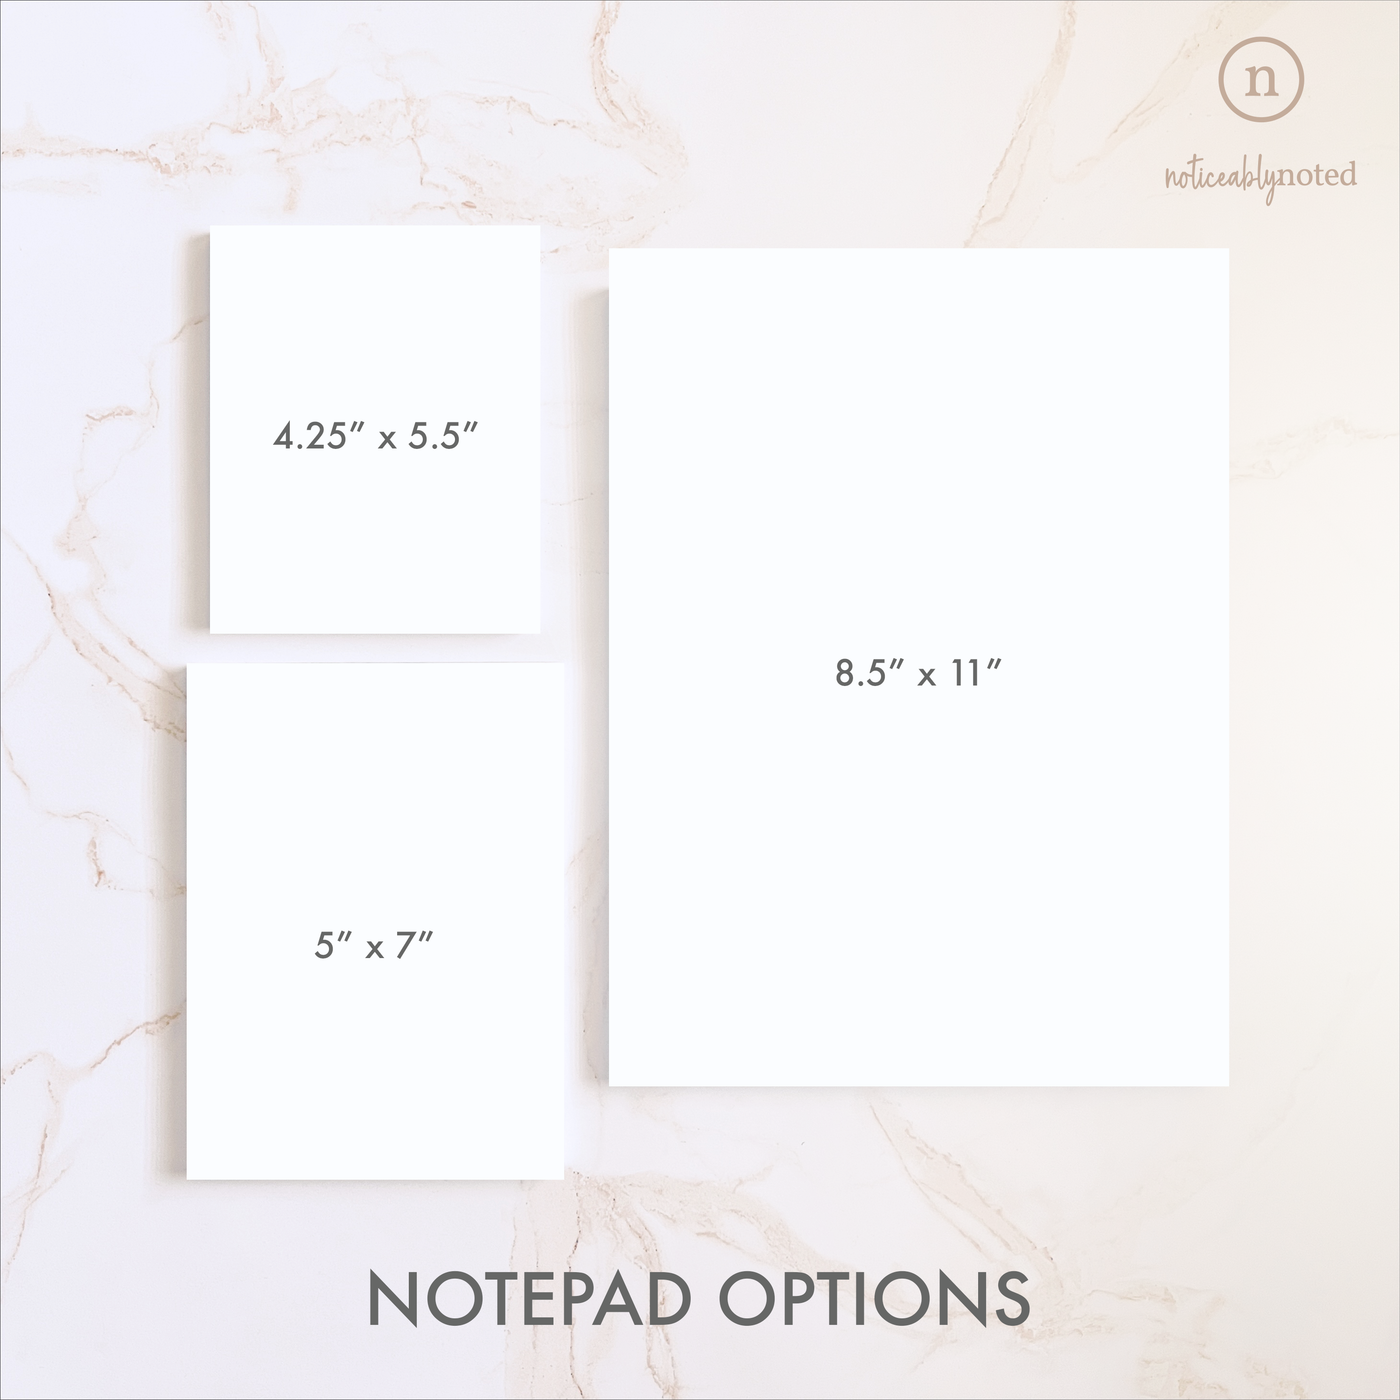 Snowshoe Notepad